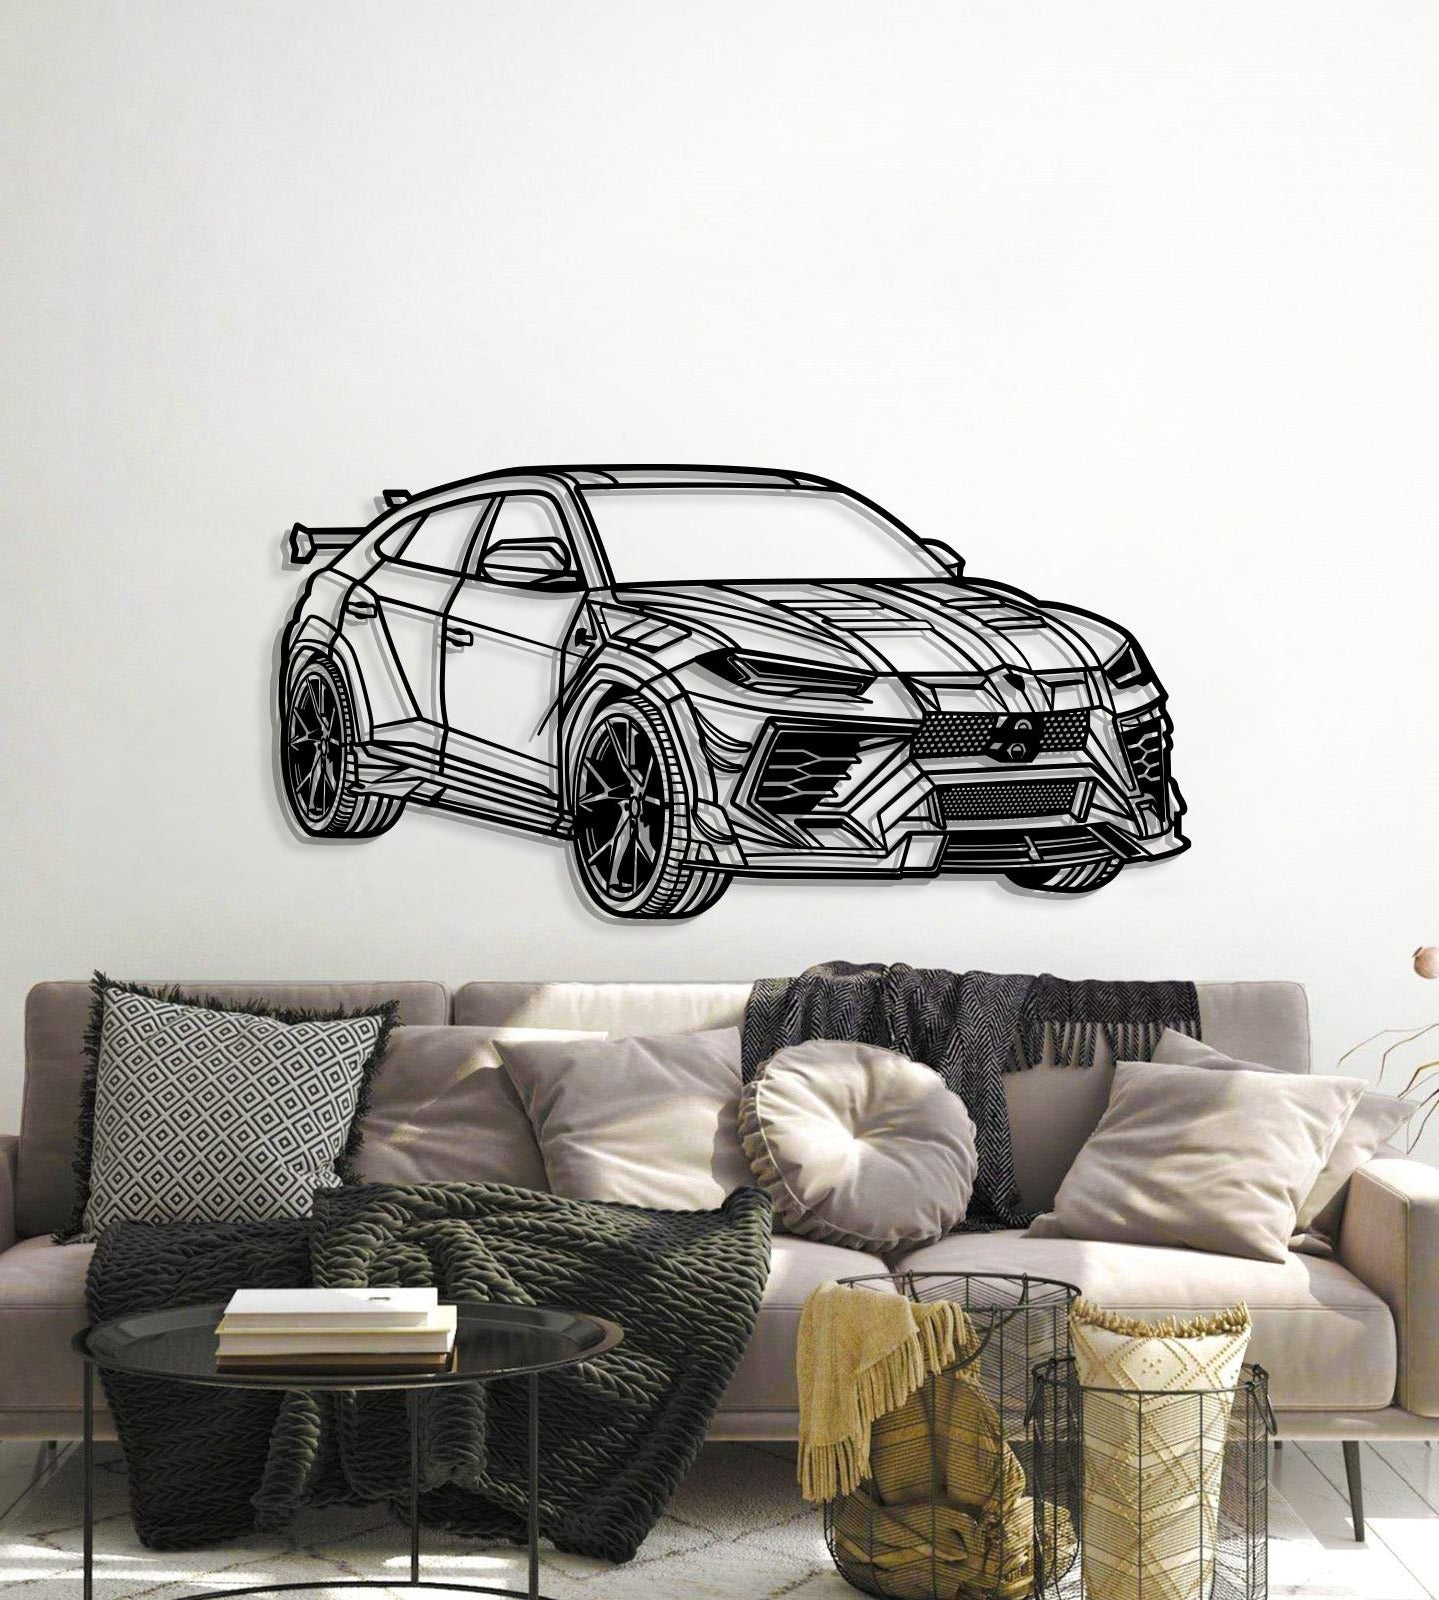 Urus Mansory Perspective Metal Car Wall Art - MT1280